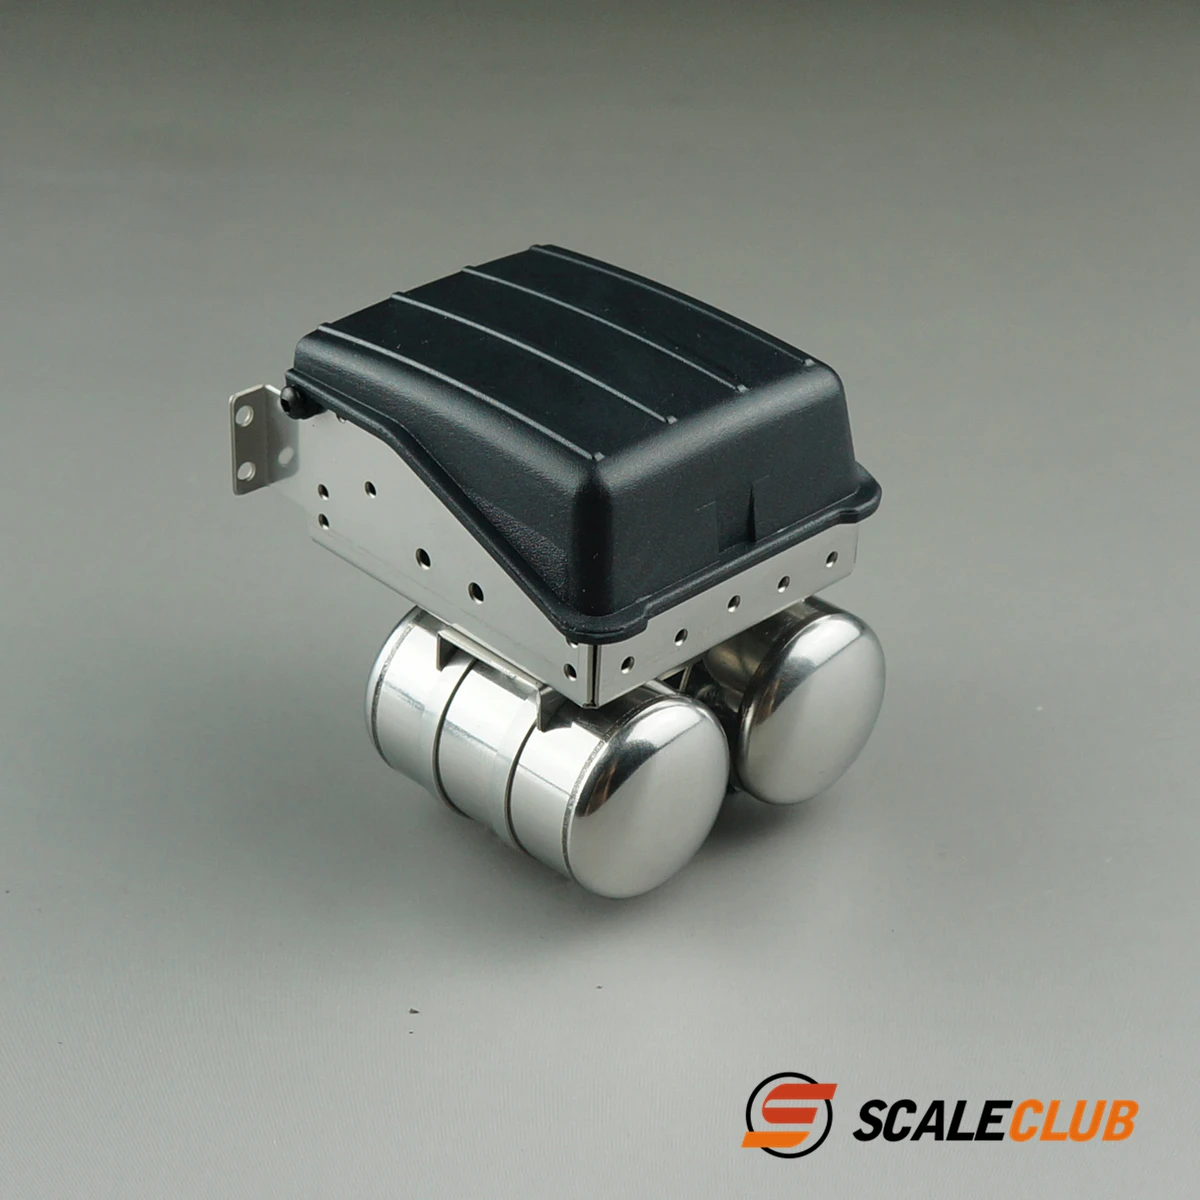 Scaleclub Model Scaleclub For Tamiya 3363 1851 Simulation Battery Box Gas Tank Metal Upgrade